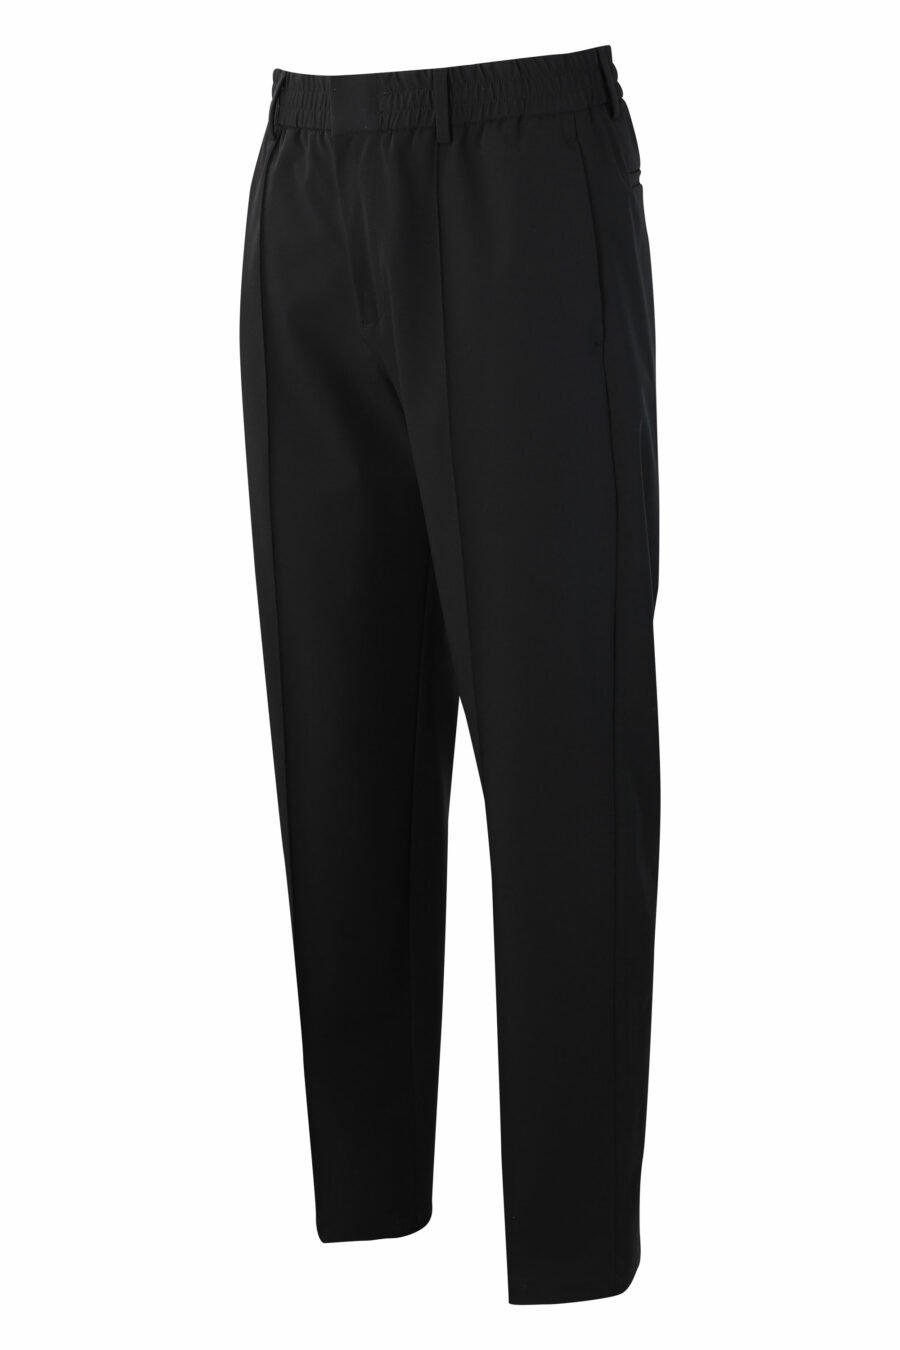 Pantalon noir avec minilogue - IMG 9926 1